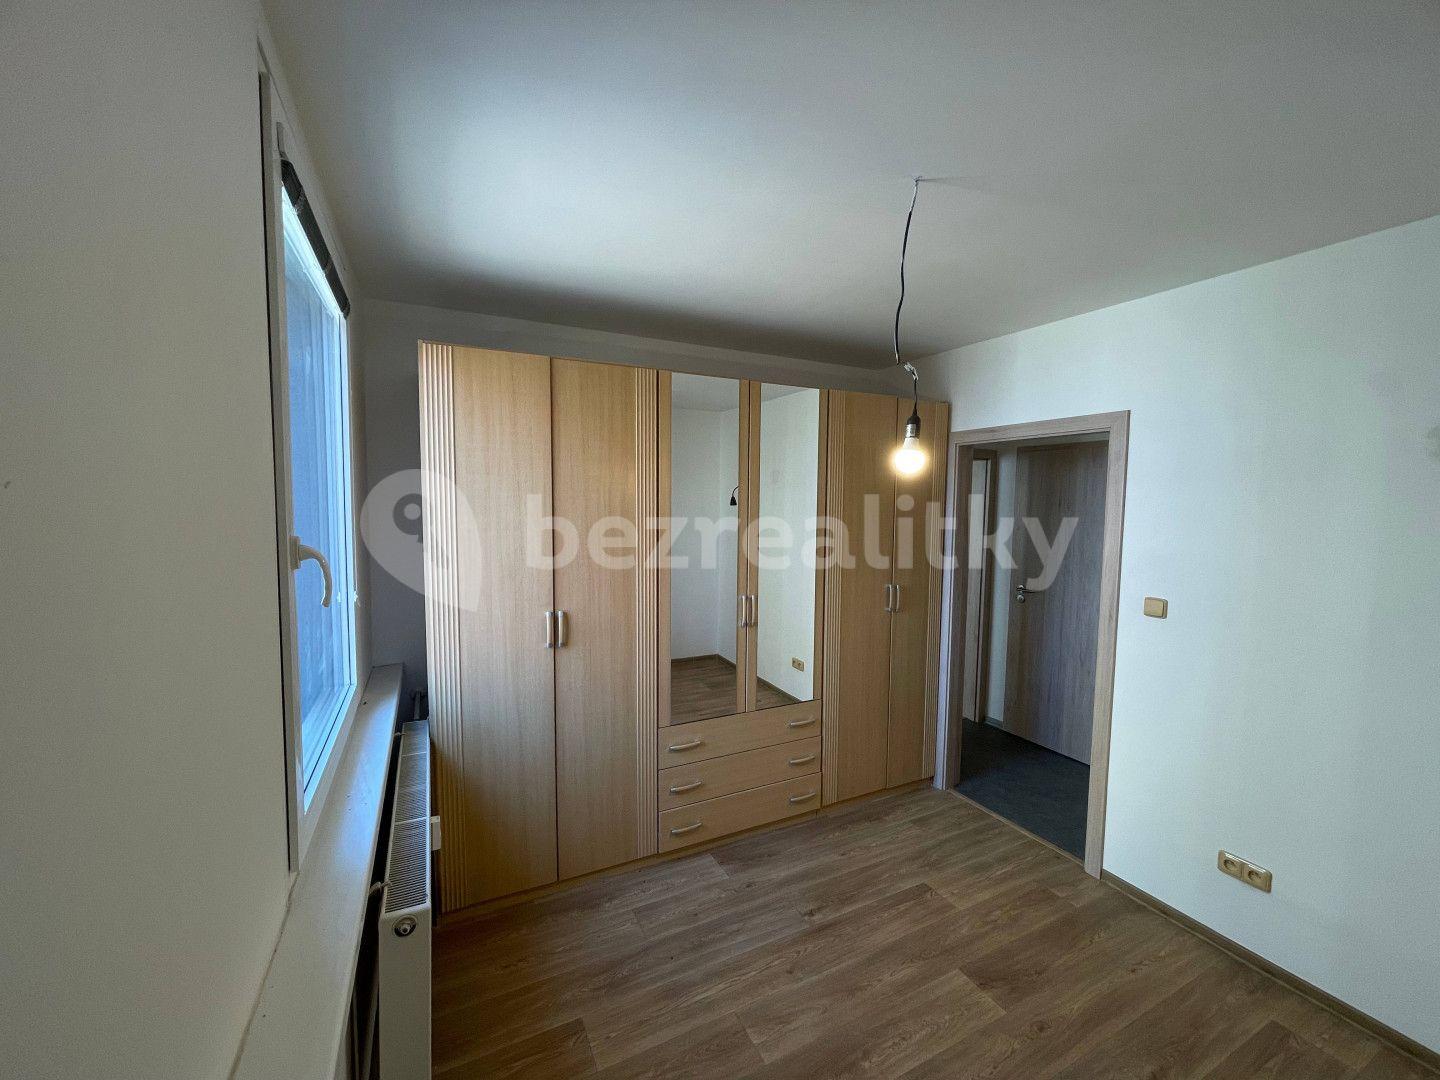 Predaj bytu 2-izbový 39 m², Dlouhá, České Budějovice, Jihočeský kraj